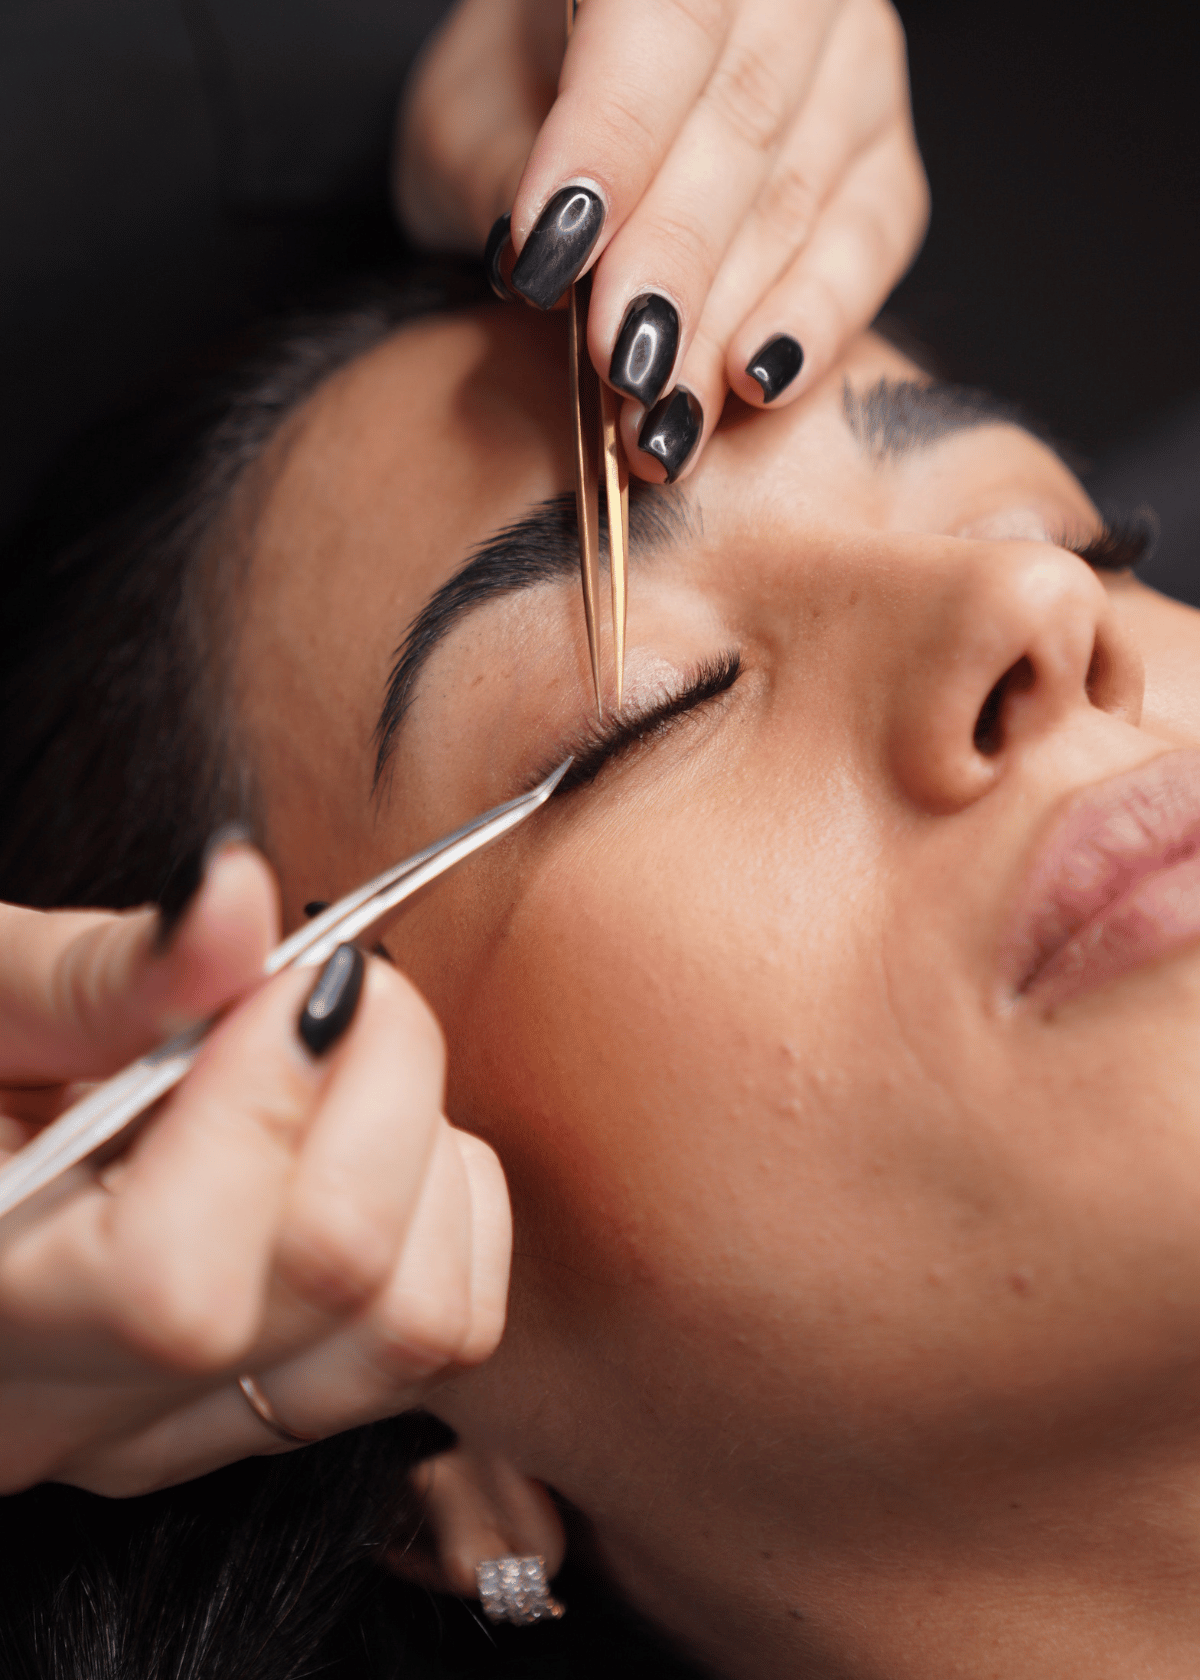 Applying False Lashes: A Step-by-Step Guide to Using Eyelash Glue